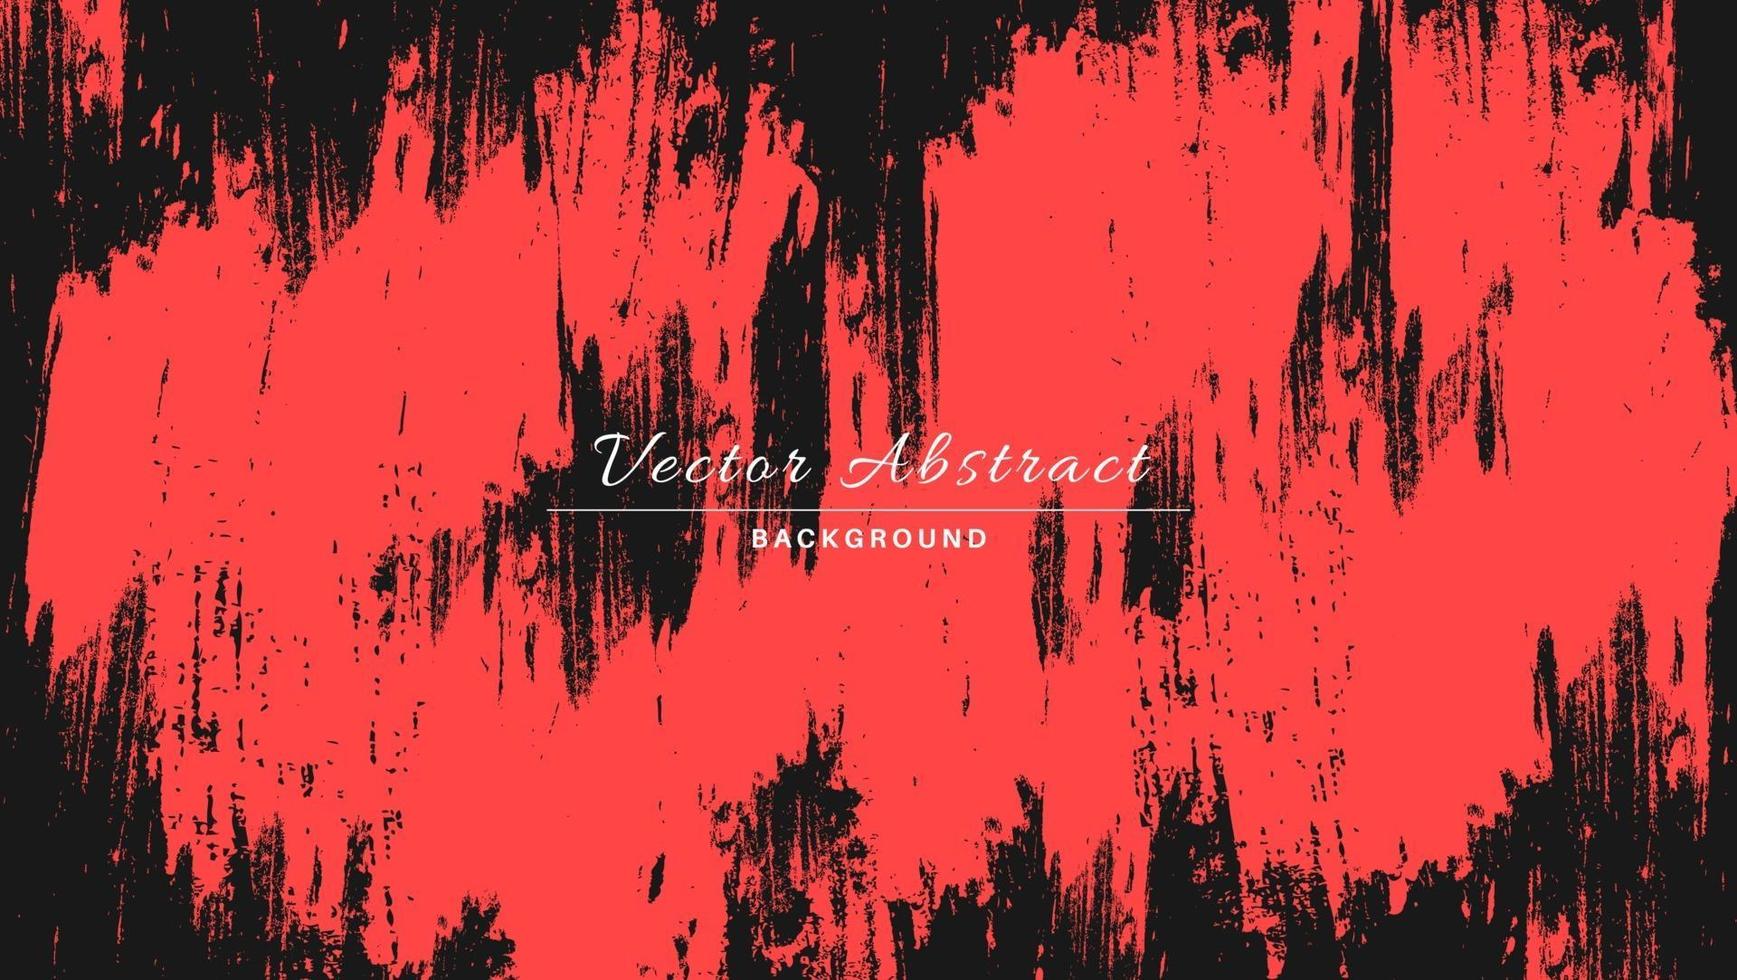 abstrakt kaos vintage röd grunge textur design i svart bakgrund vektor